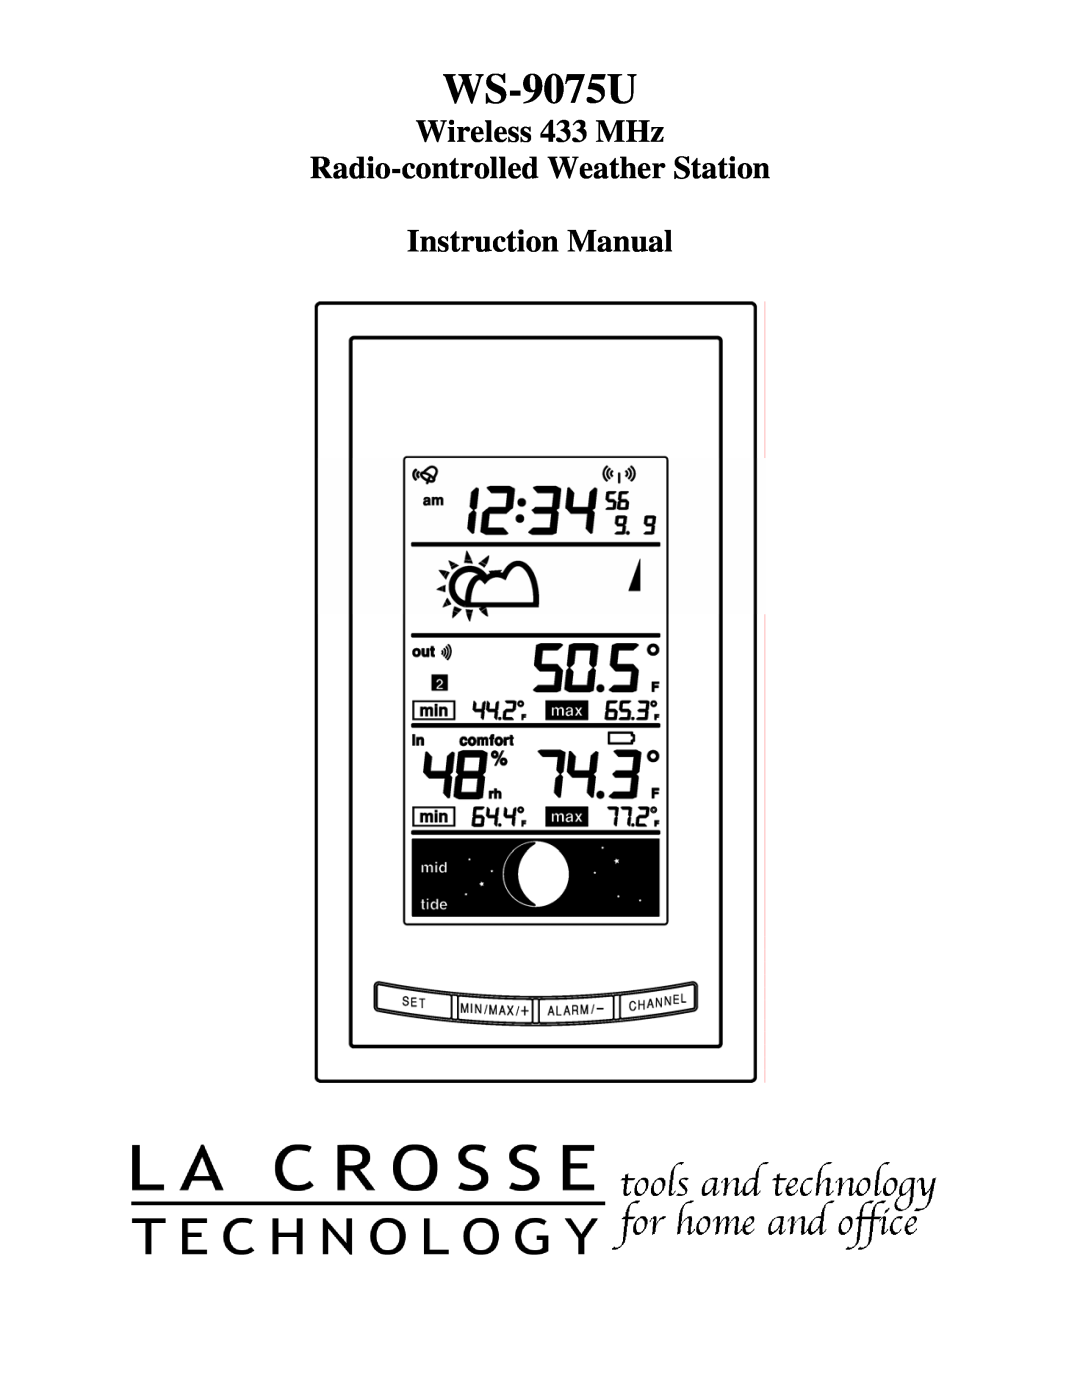 La Crosse Technology WS-9075U instruction manual Wireless 433 MHz Radio-controlledWeather Station, Instruction Manual 